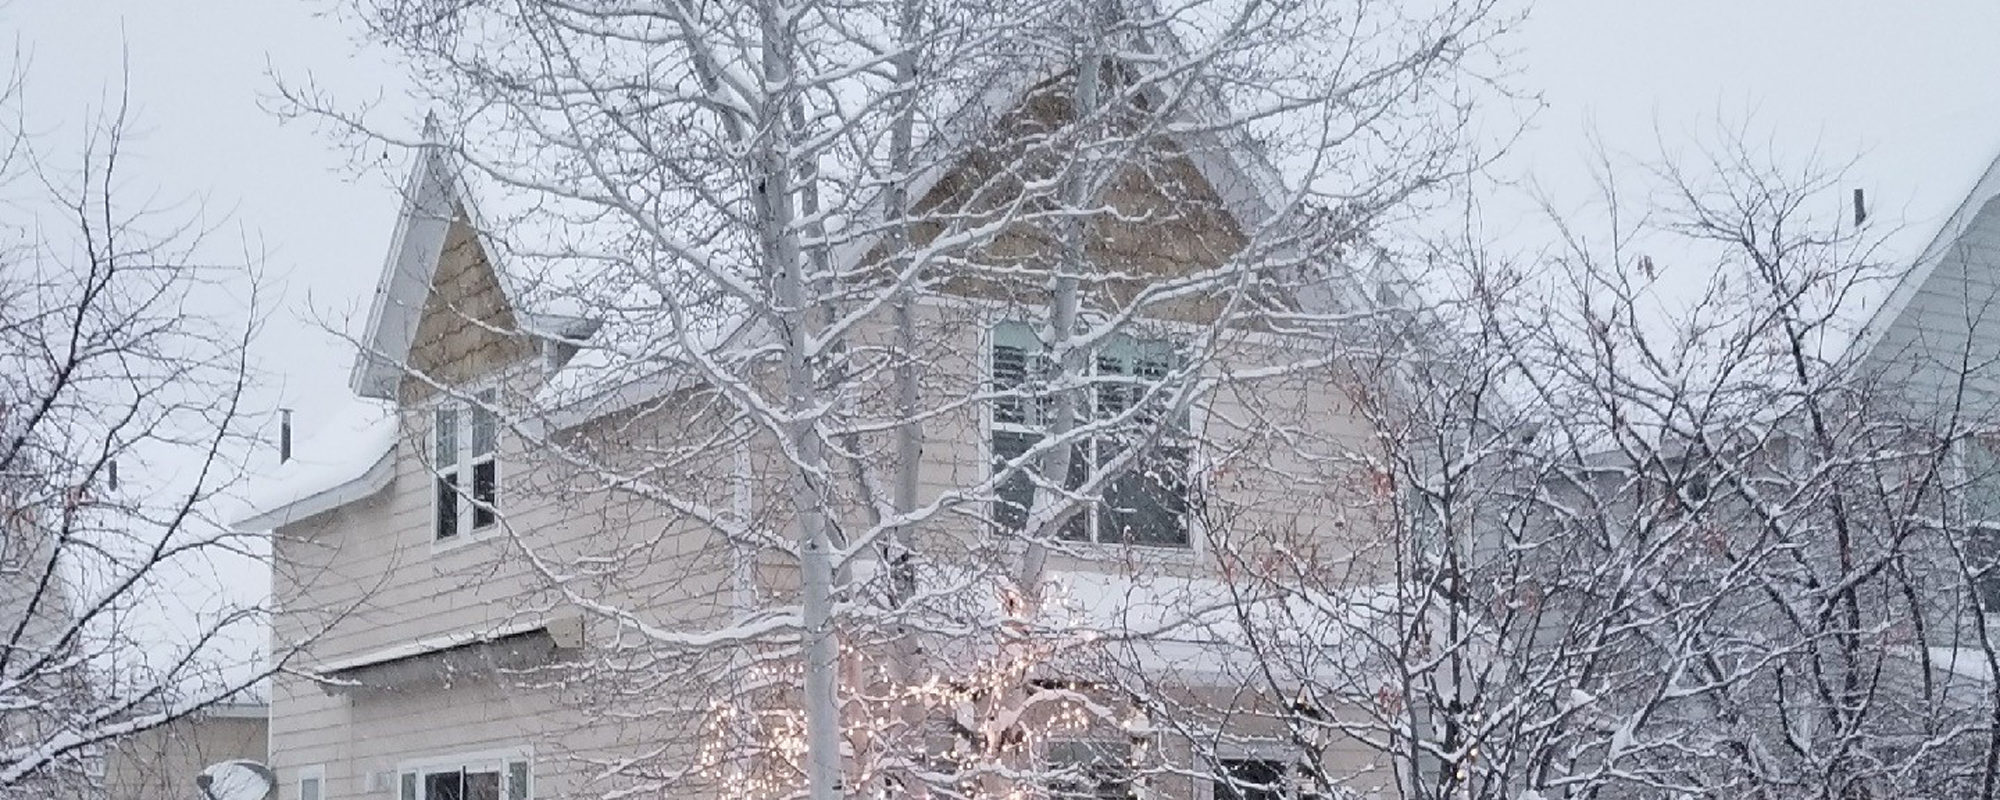 House in Winter Scene